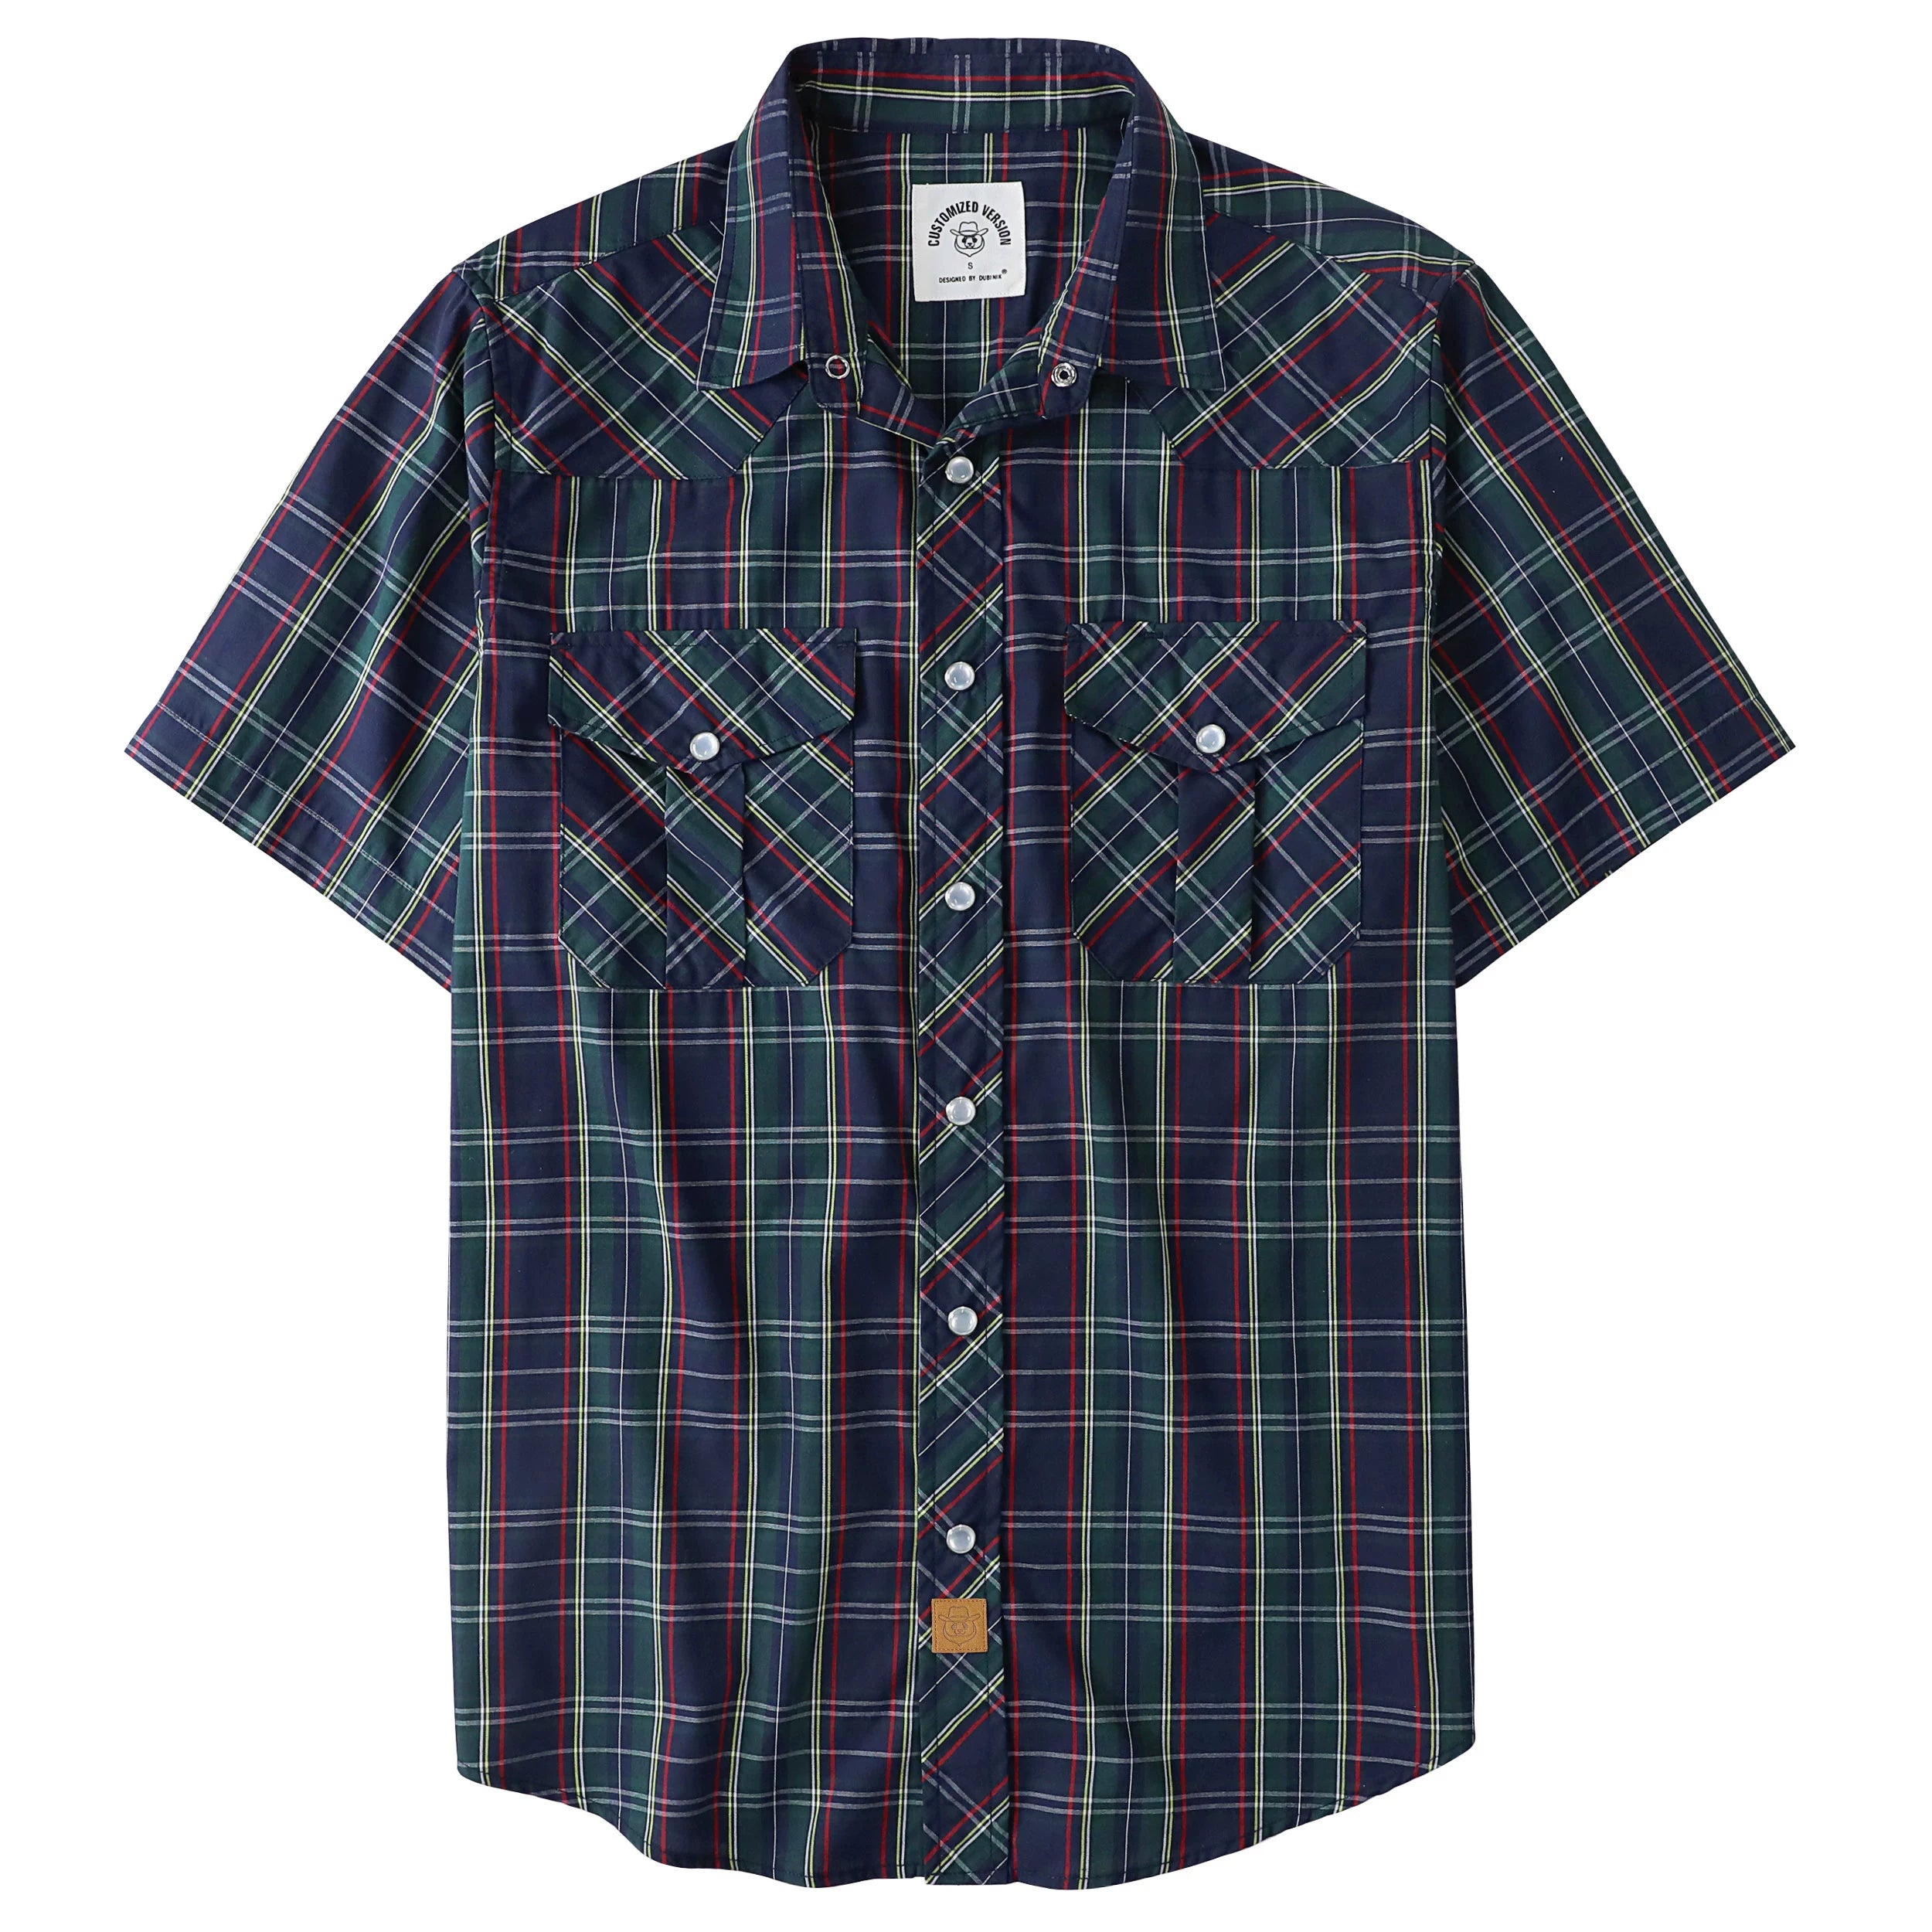 Dubinik® Western Shirts for Men Short Sleeve Plaid Pearl Snap Shirts for Men Button Up Shirt Cowboy Casual Work Shirt#41032